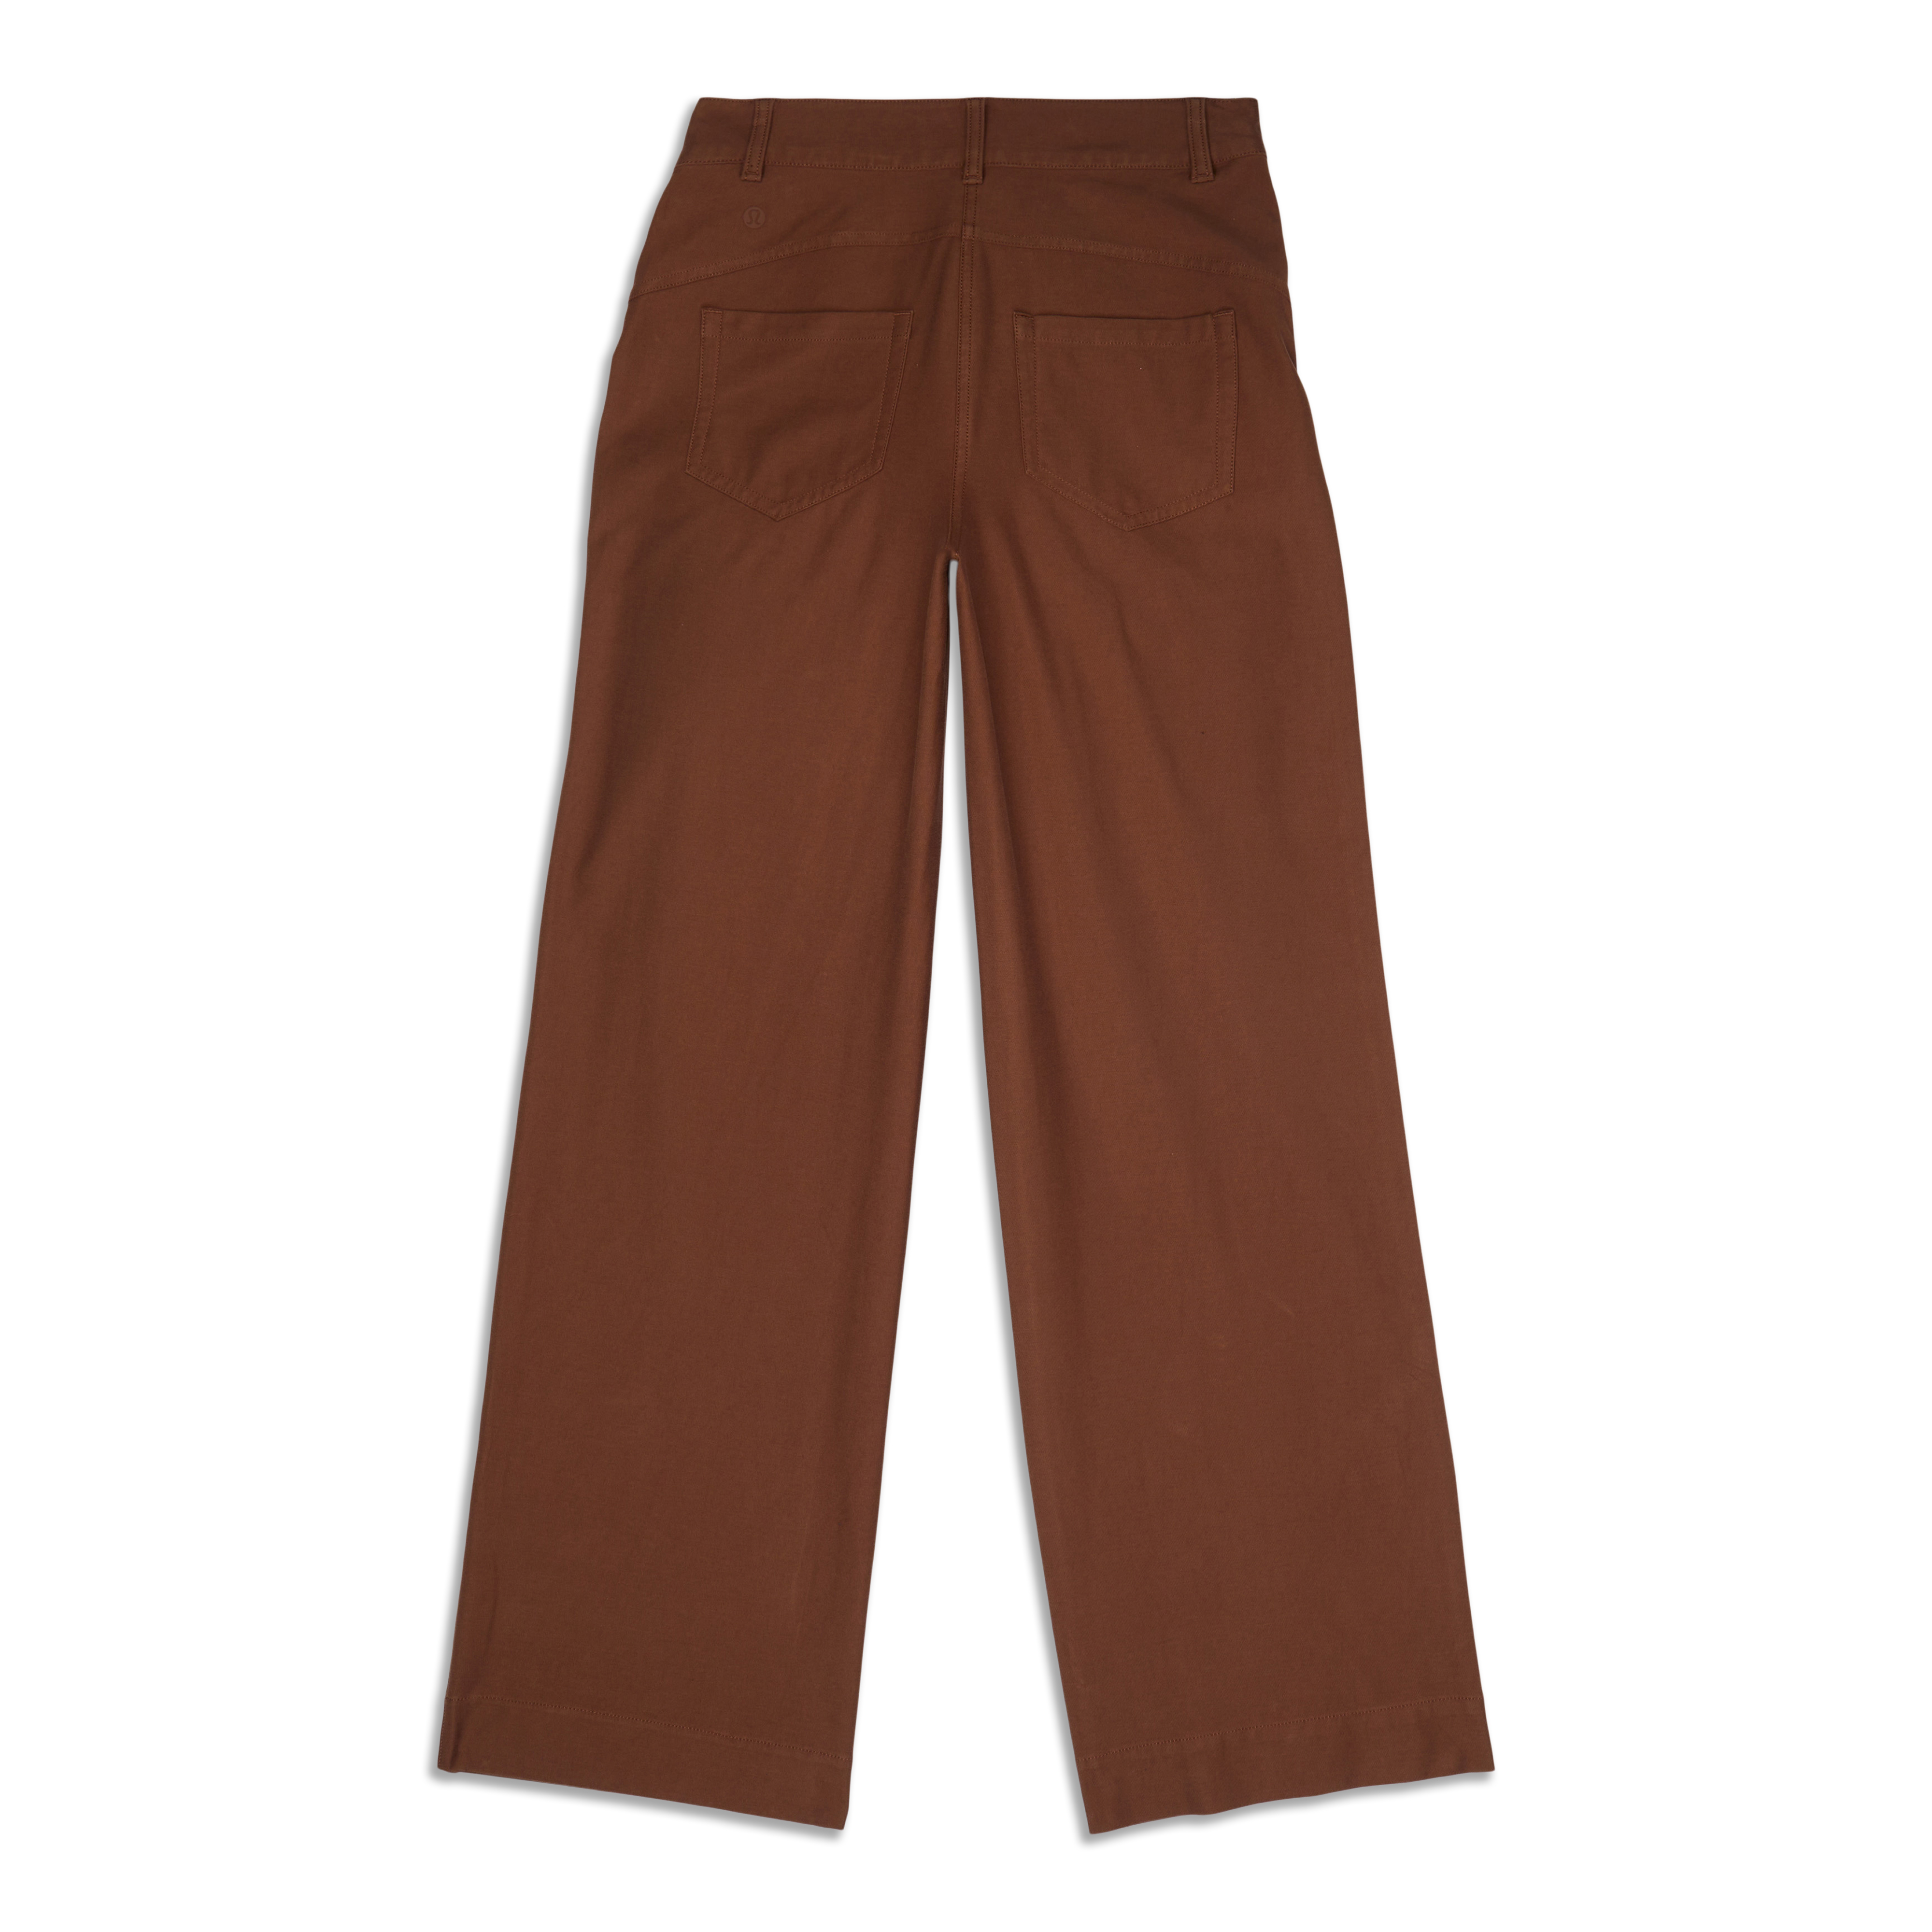 Lululemon City Sleek 5 Pocket Pant 30 Rhino Grey, Women's - Bottoms, Kitchener / Waterloo